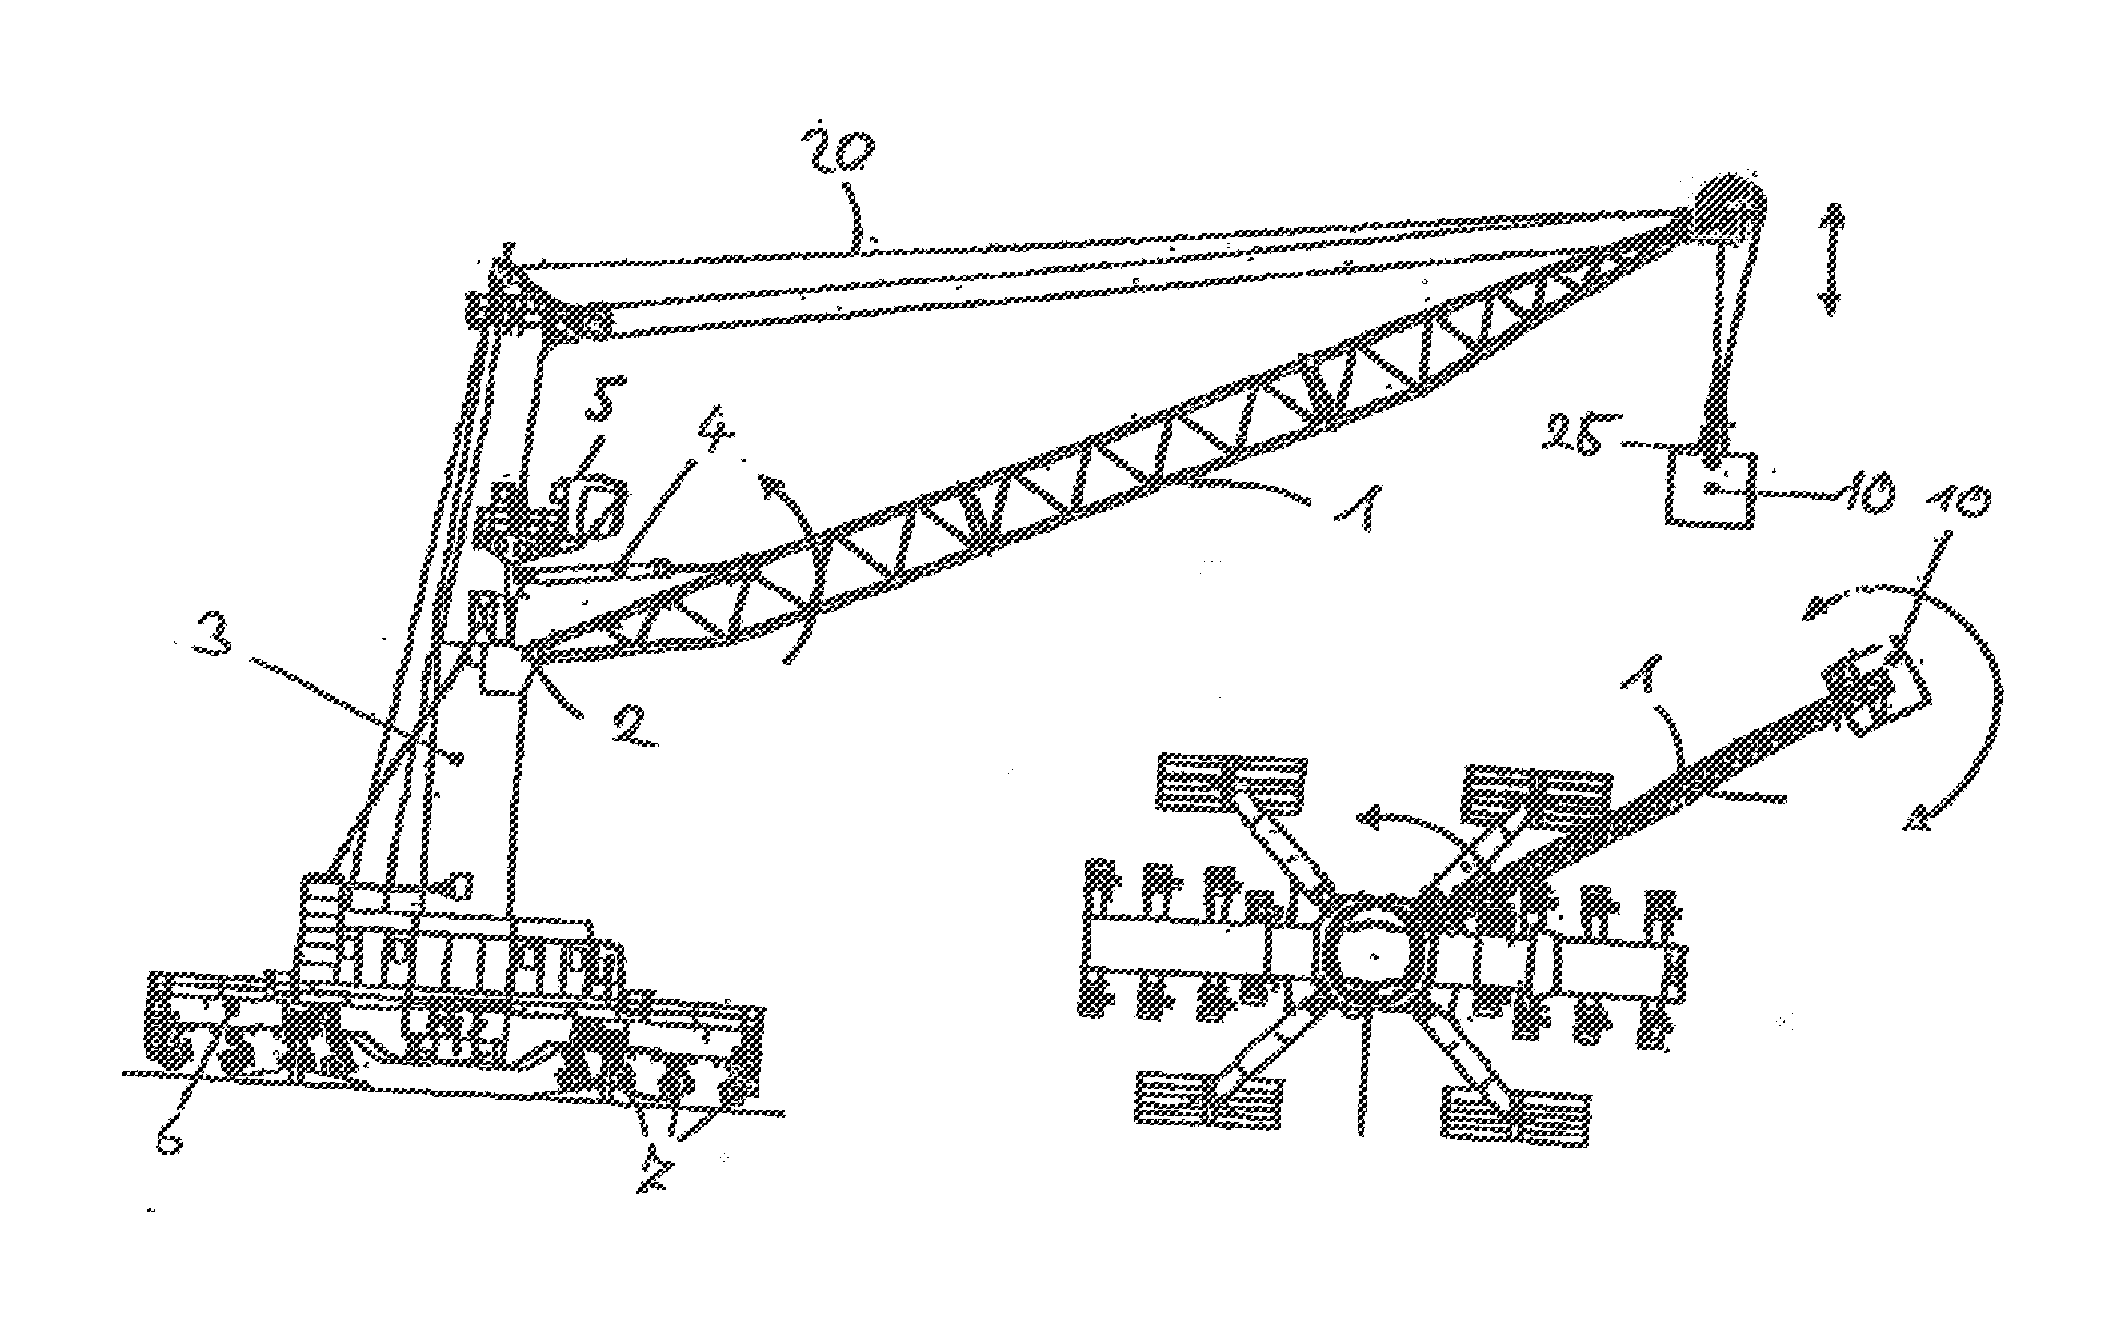 Crane control apparatus